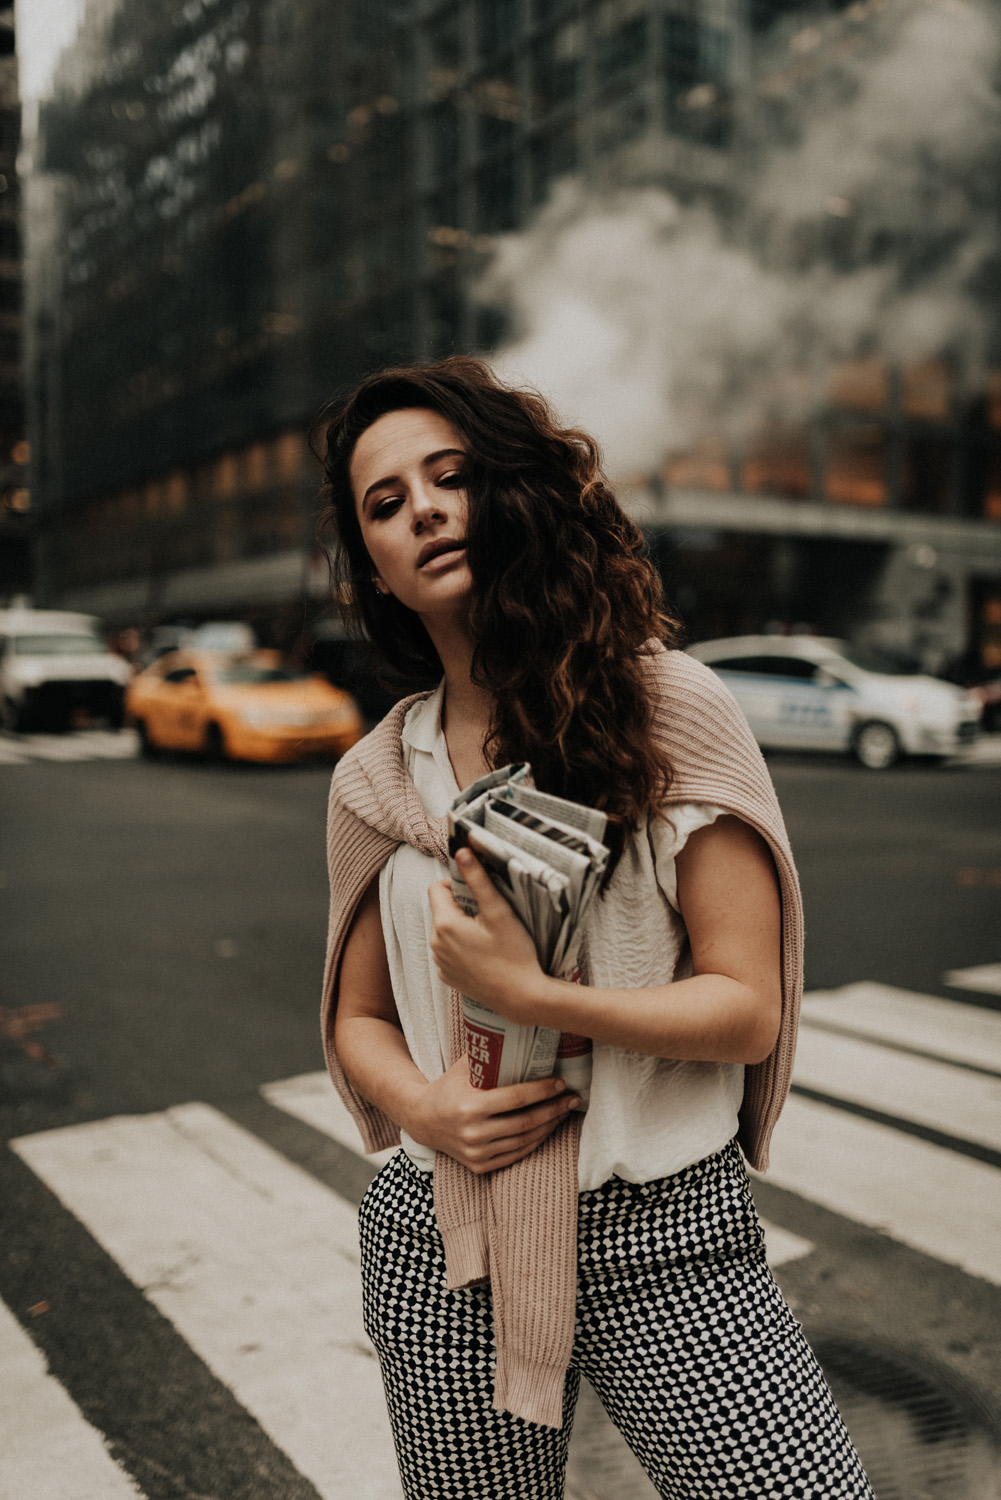 KyleWillisPhoto-Kyle-Willis-Photography-New-York-City-Grand-Central-Station-Christy-Soeder-Photoshoot-Portrait-Female-Model-Times-Jersey-Portrait-Photographer